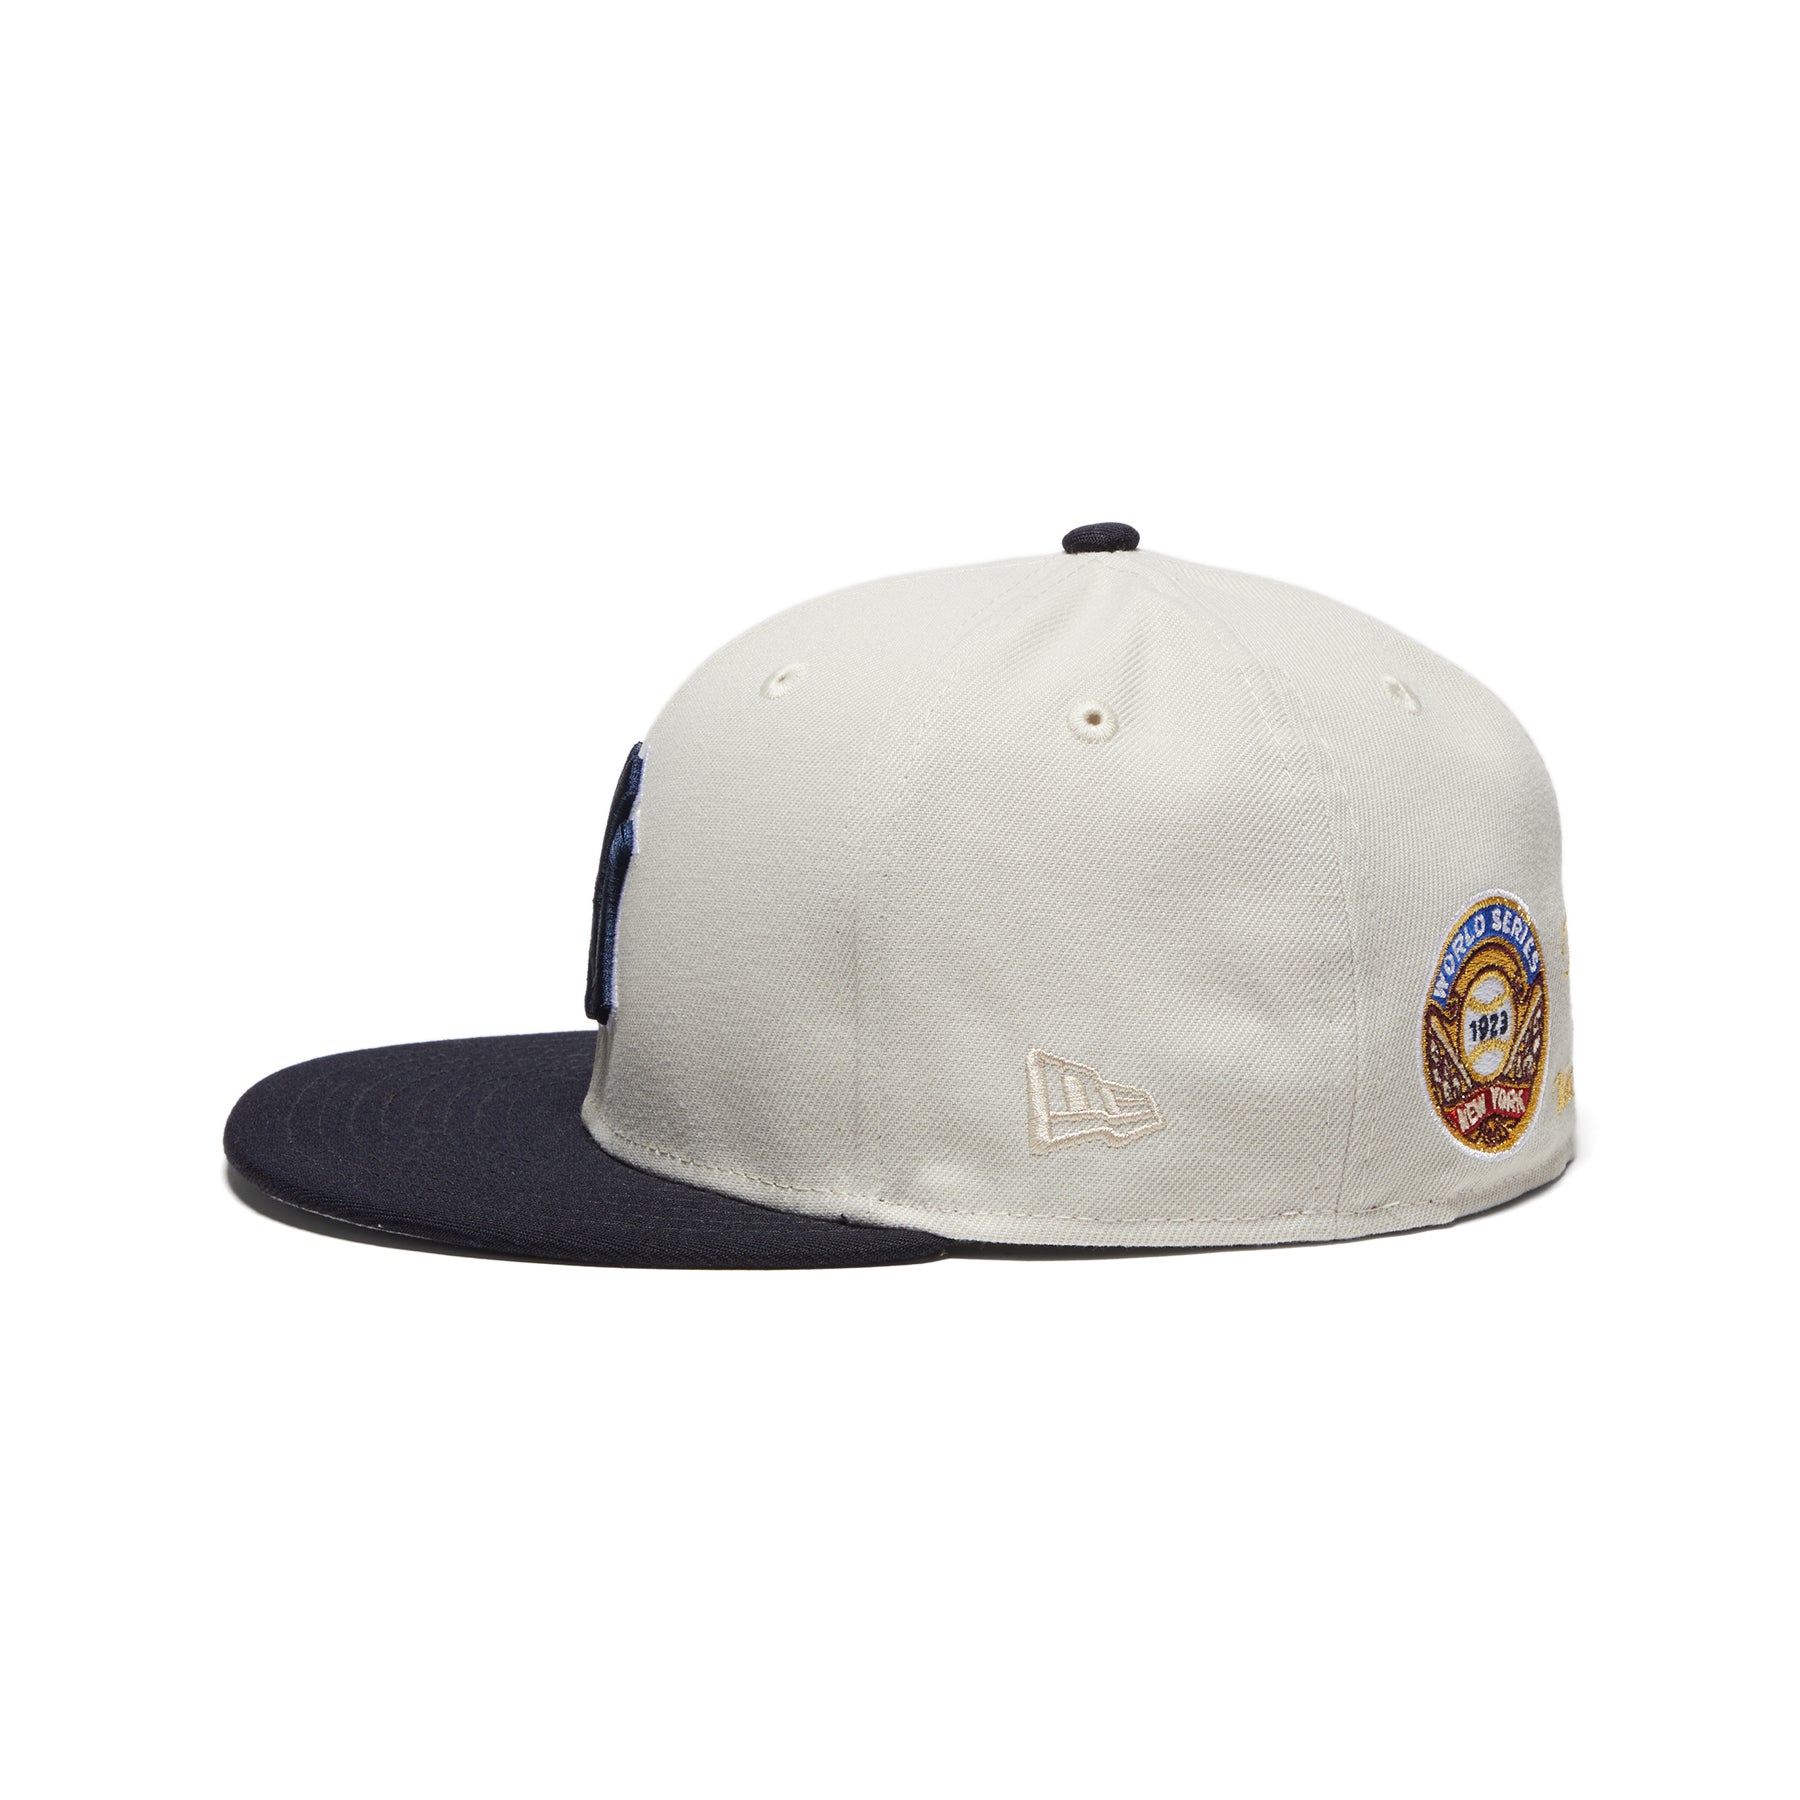 NEW ERA NY Yankees Cap Hat SnapBack Black One Size RN11493 CA40289